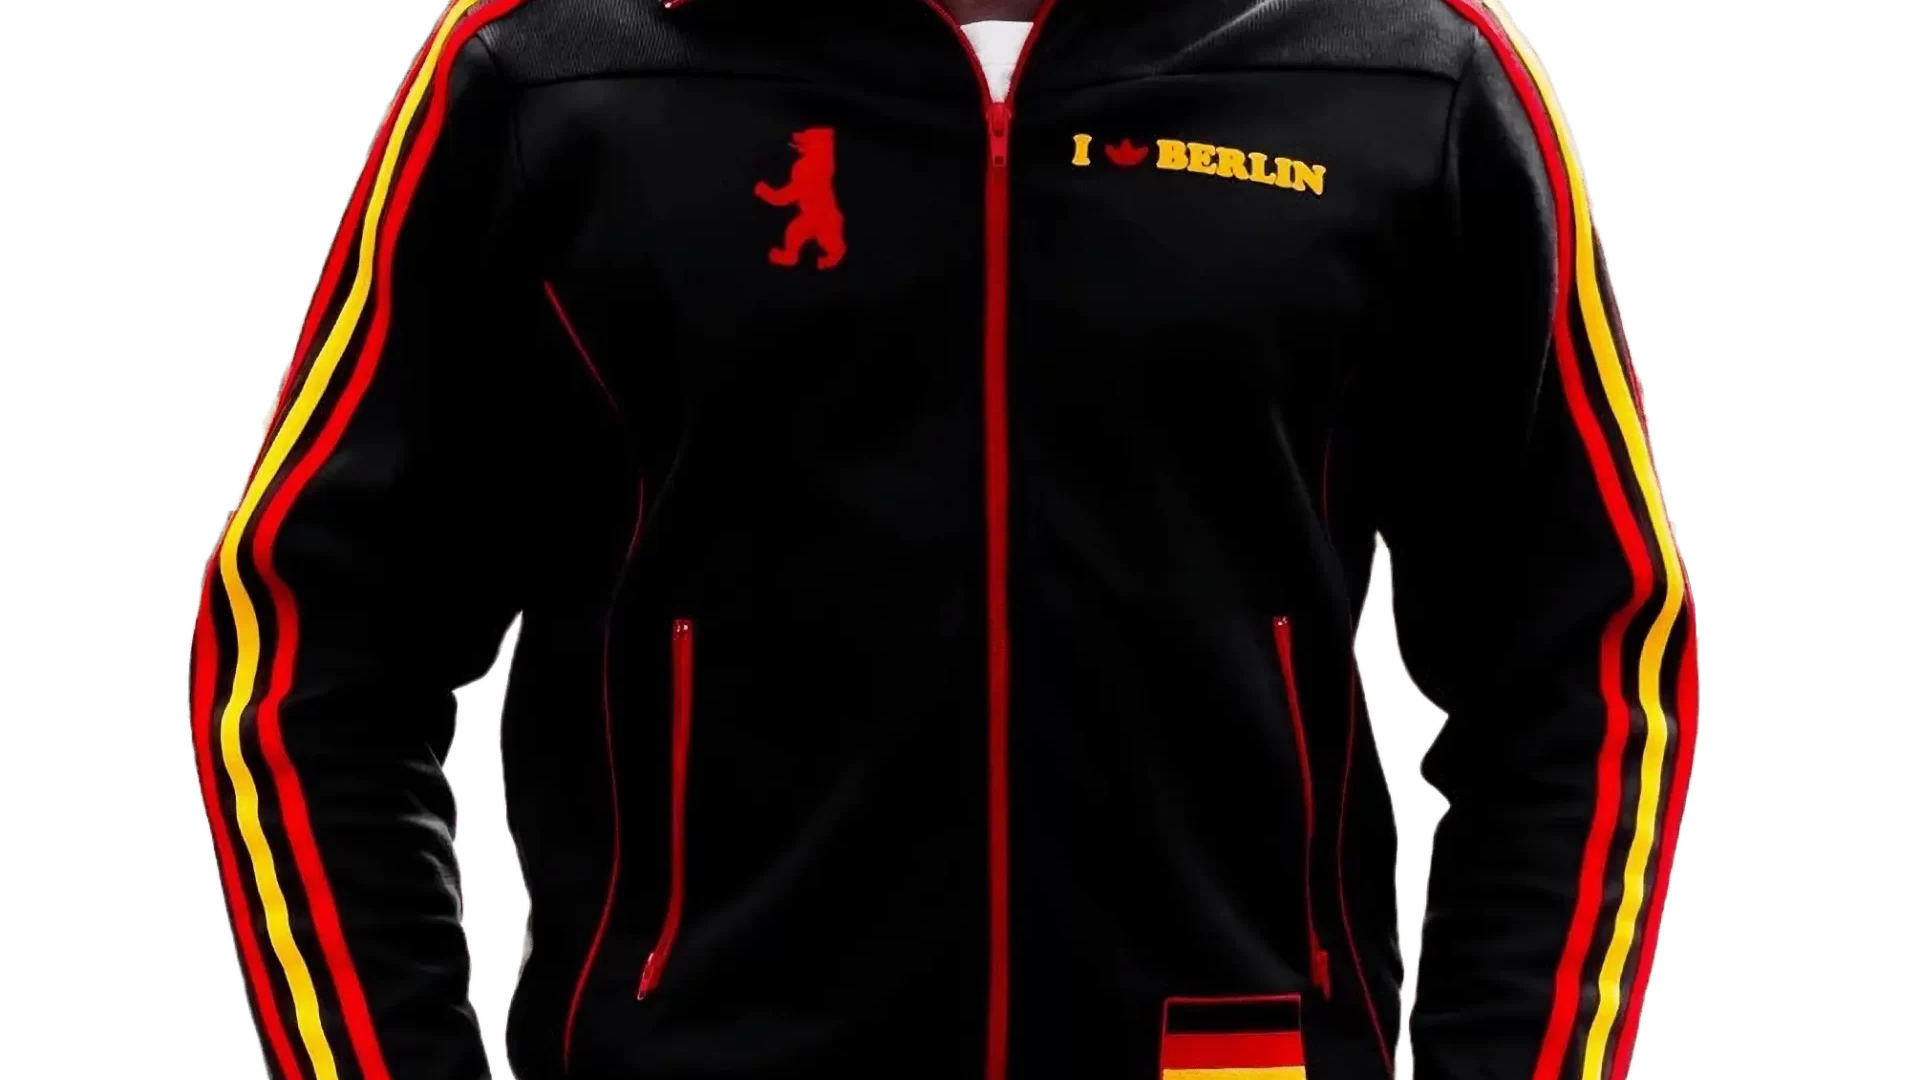 Men's 2006 Berlin Track Top by Adidas Originals: Fearless (EnLawded.com file #lmchk58615ip2y123309kg9st)